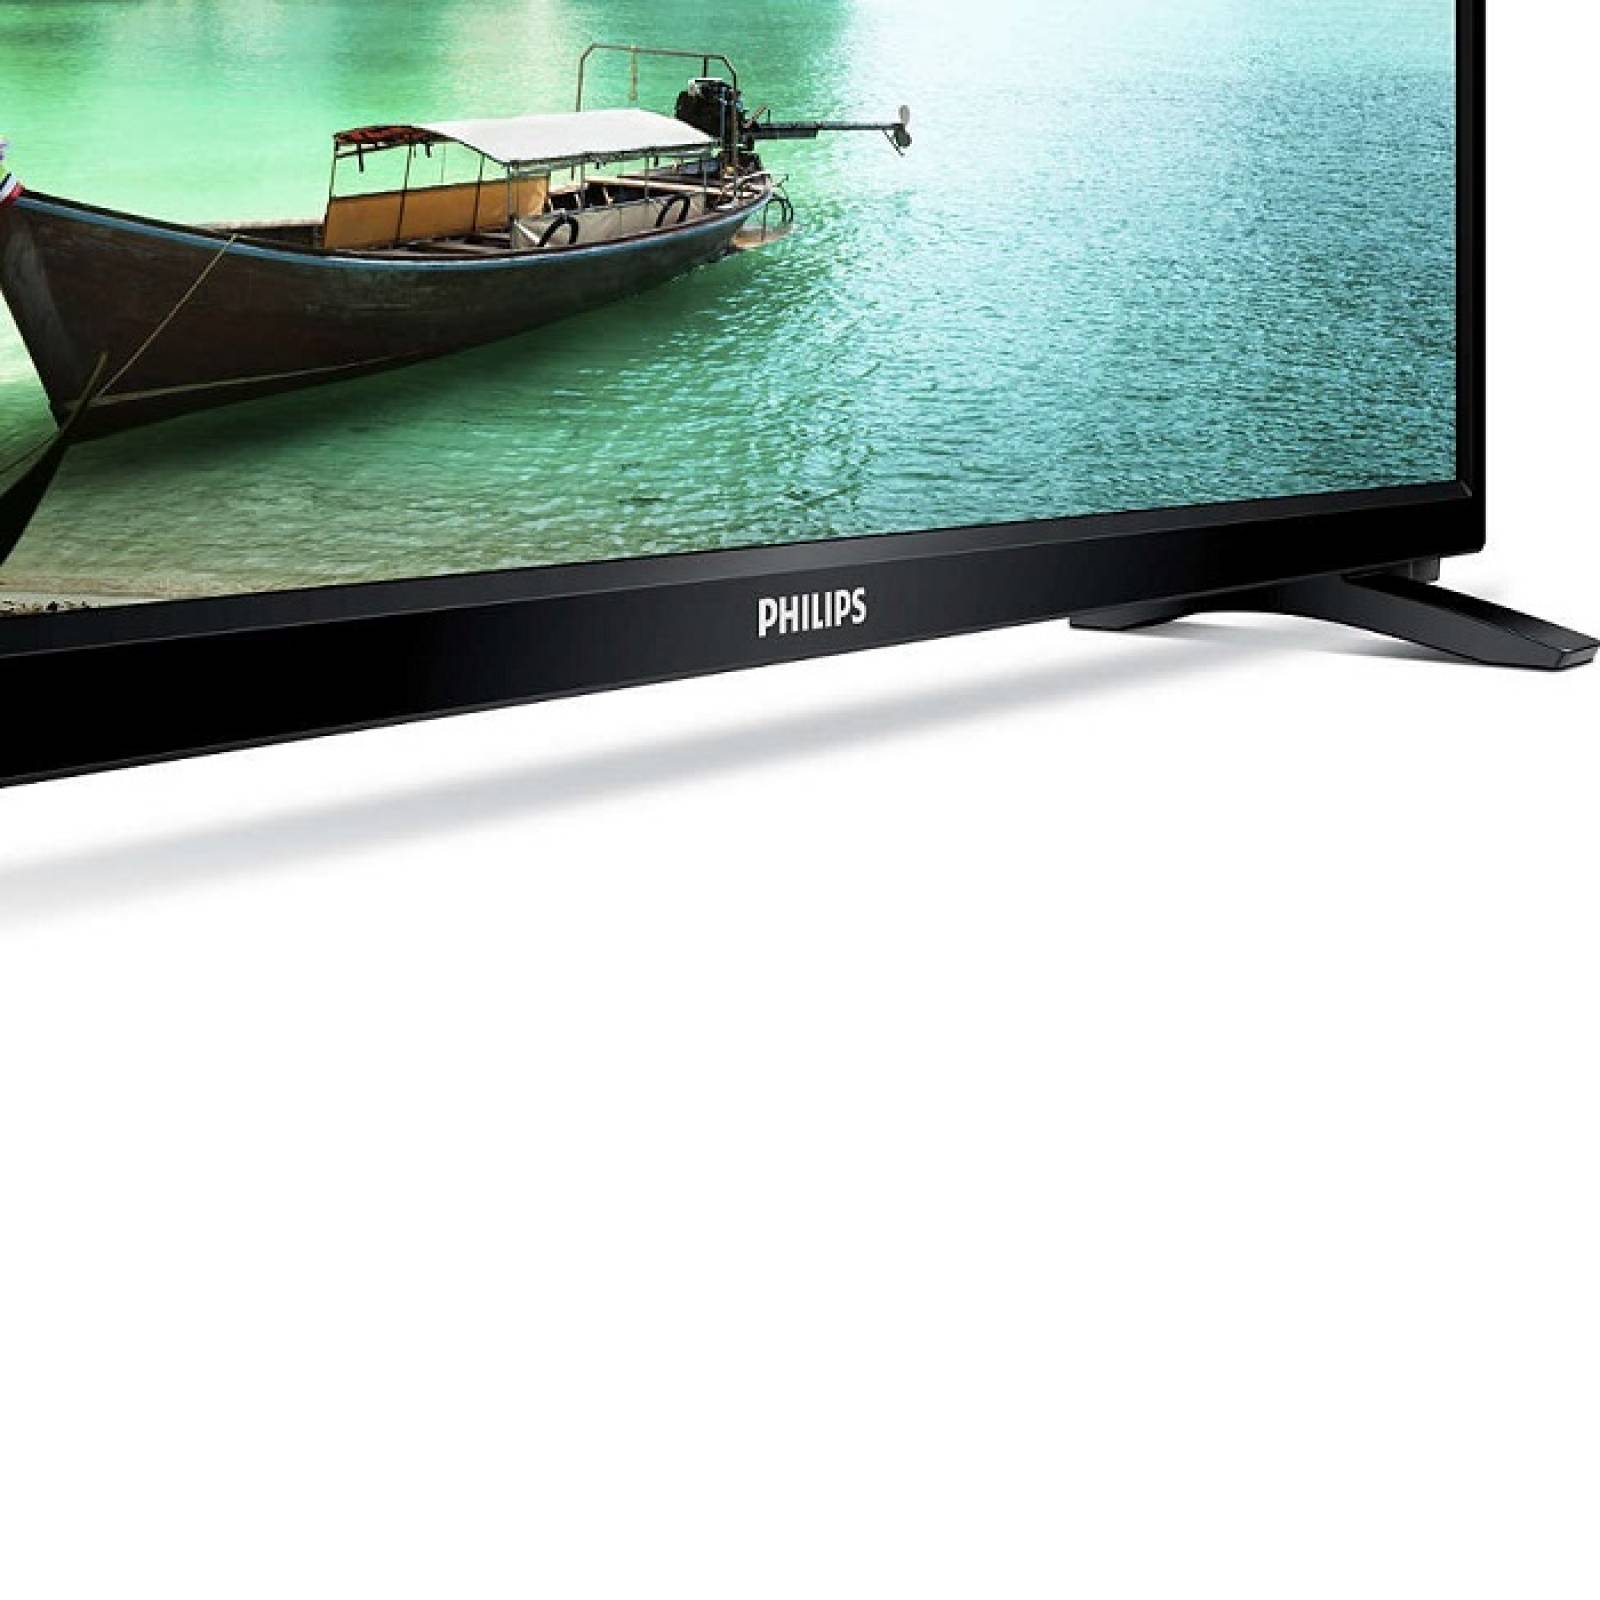 Pantalla 24 Philips LED LCD USB HDMI 24PFL3603 / F7 - Reacondicionado